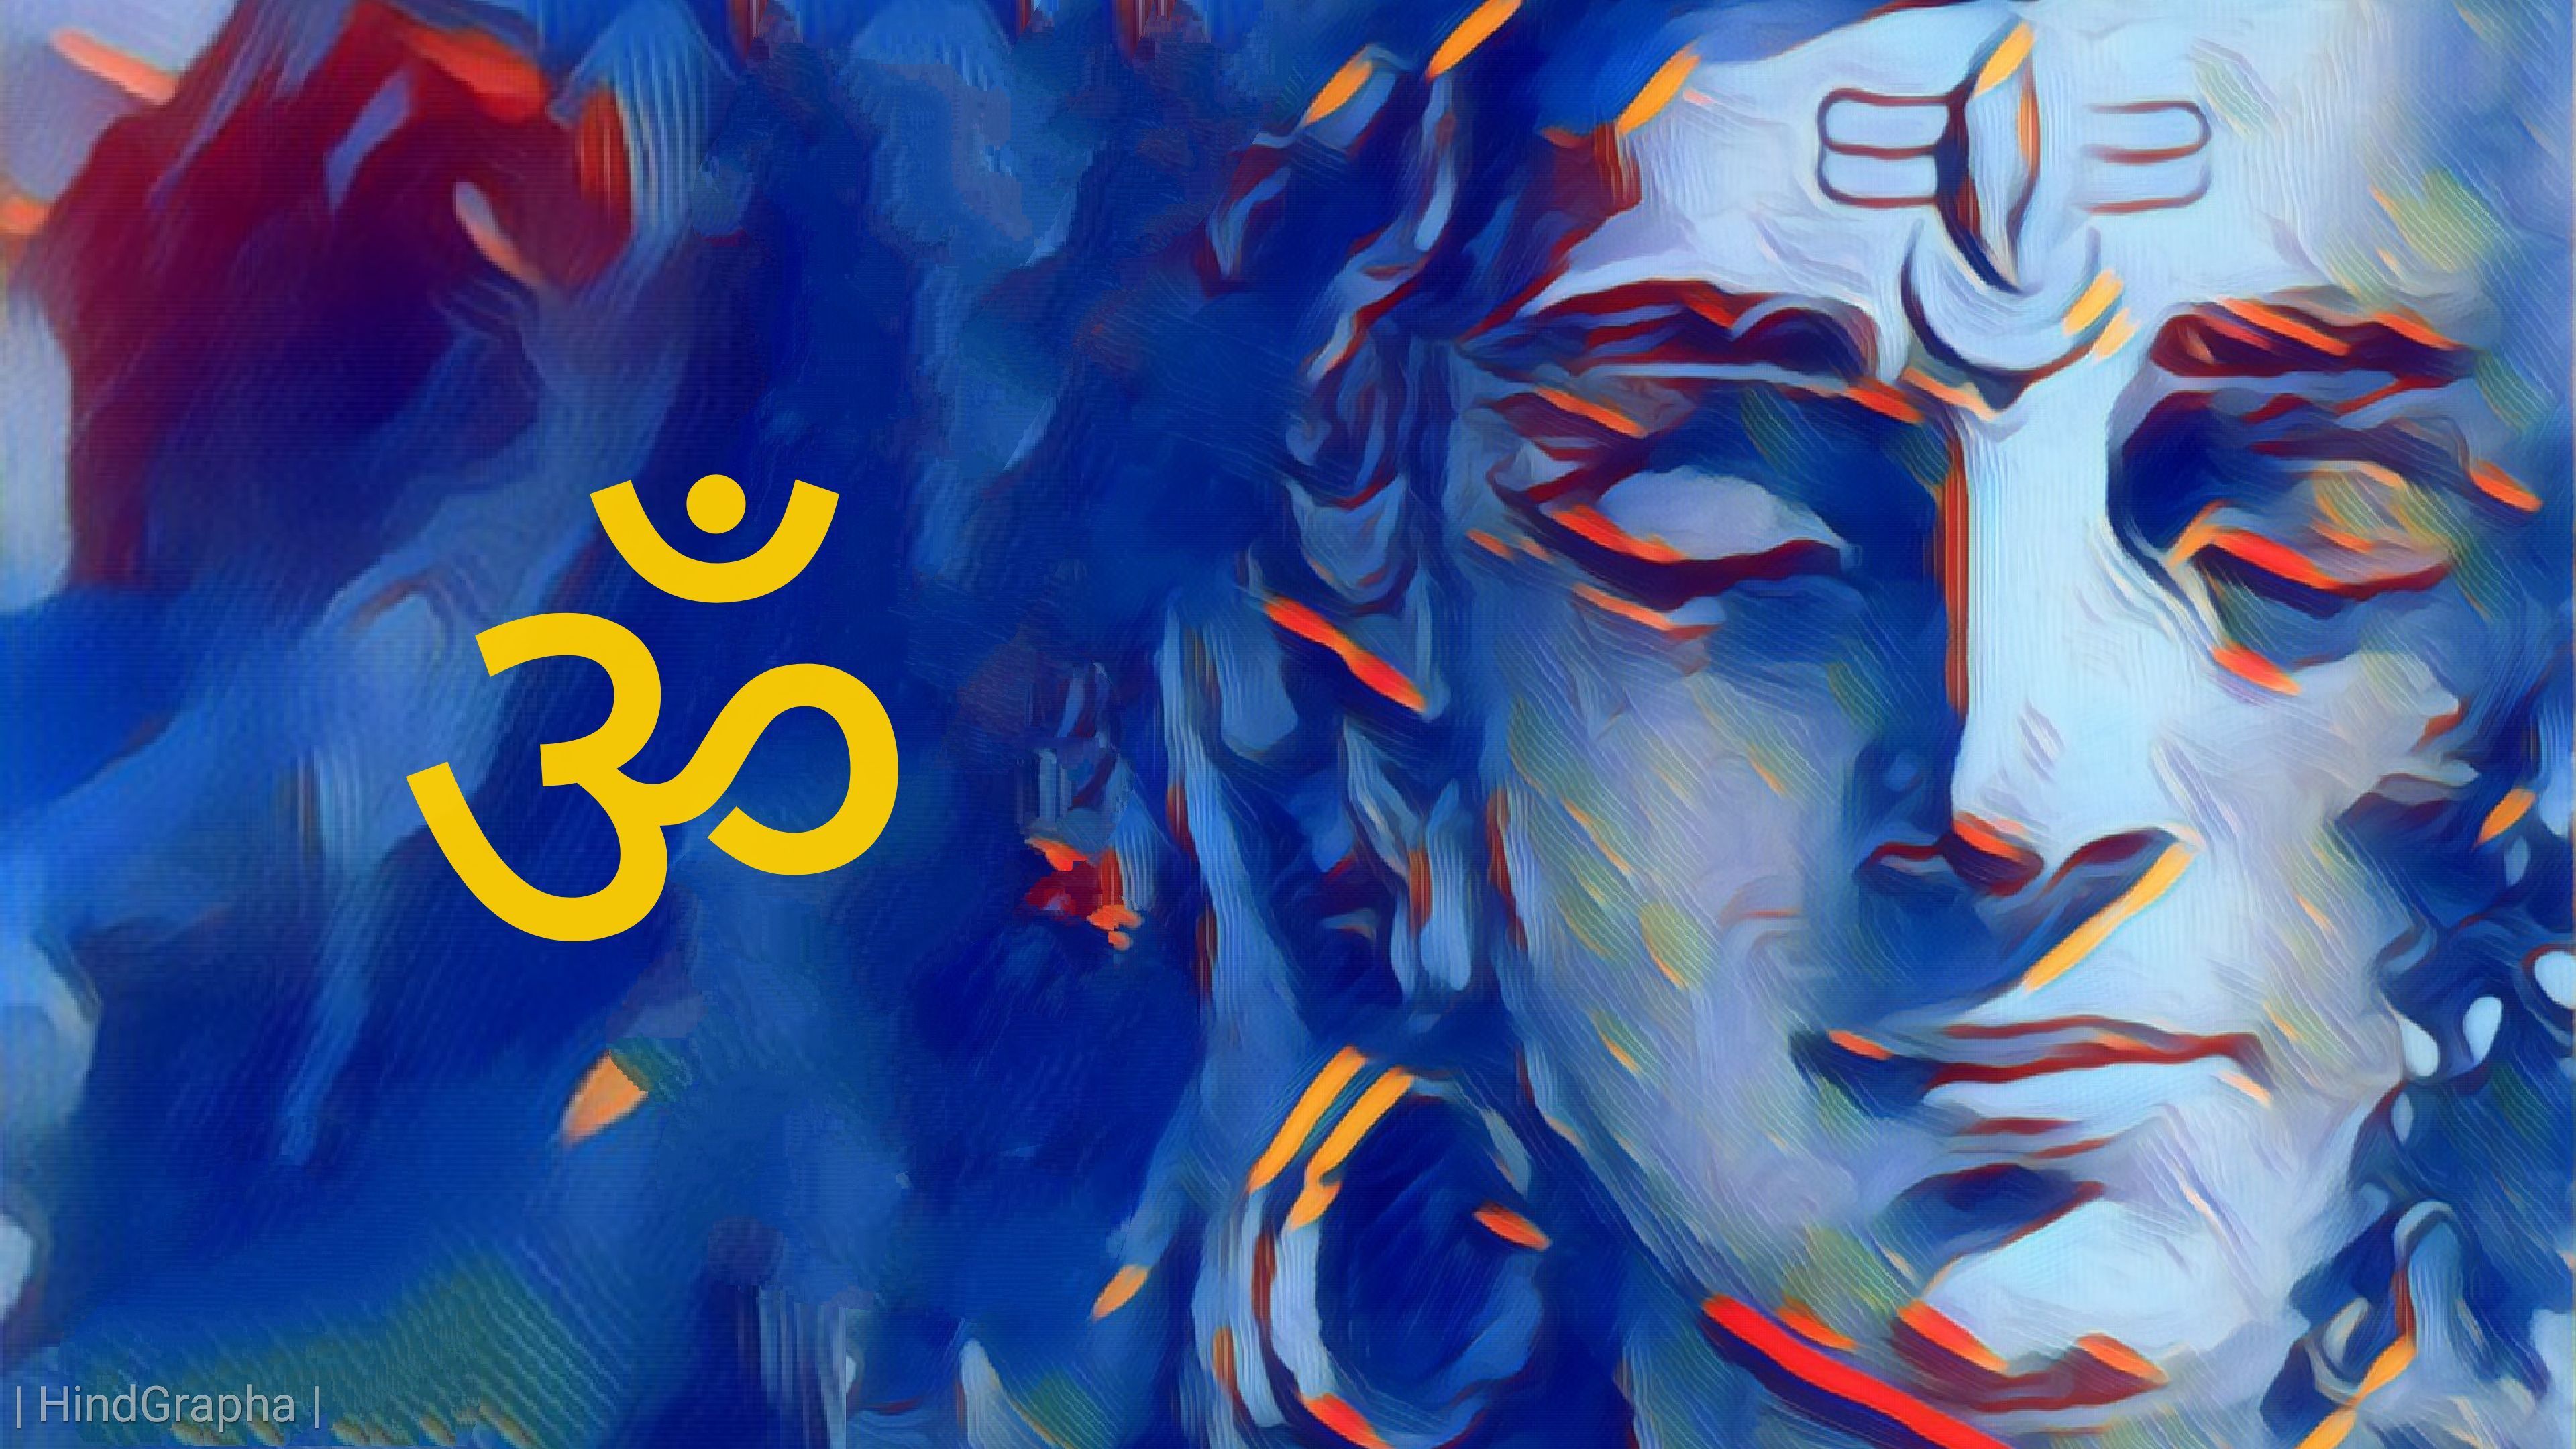 Lord Shiva Desktop 4k Wallpapers - Wallpaper Cave